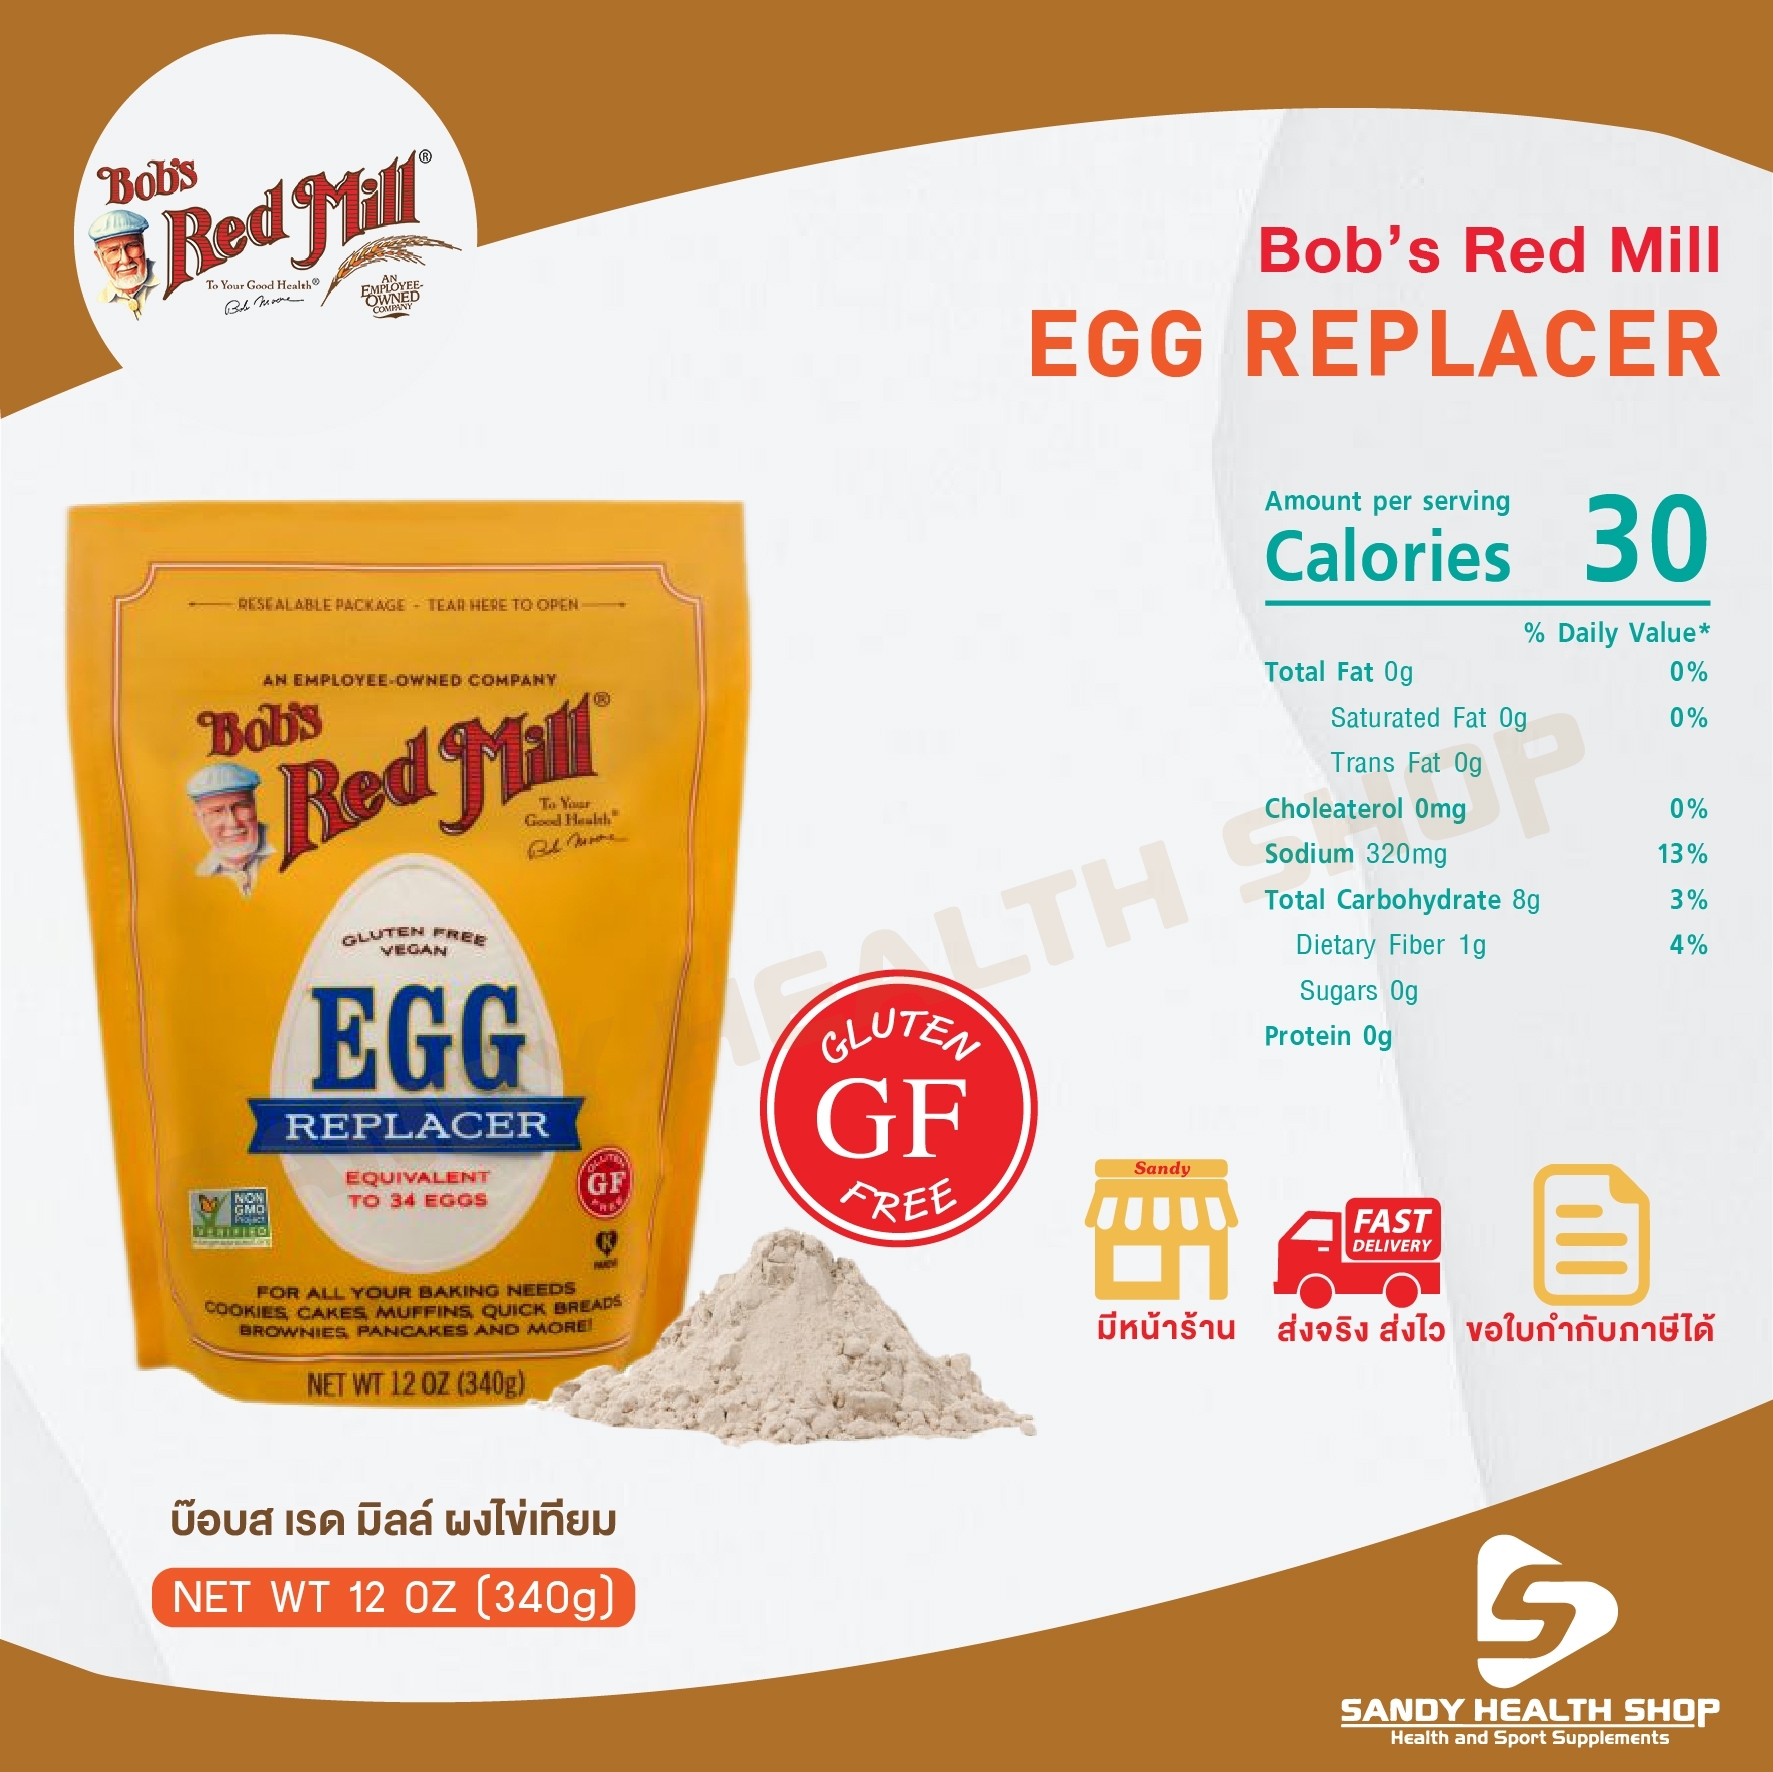 Bob's Red Mill Gluten Free Egg Replacer 340g (12oz) ผงไข่เทียม ผงทดแทนไข่ ไม่มีกลูเตน จัดส่งทันที รับประกันของแท้ 100% มีหน้าร้านสามารถให้คำปรึกษาได้